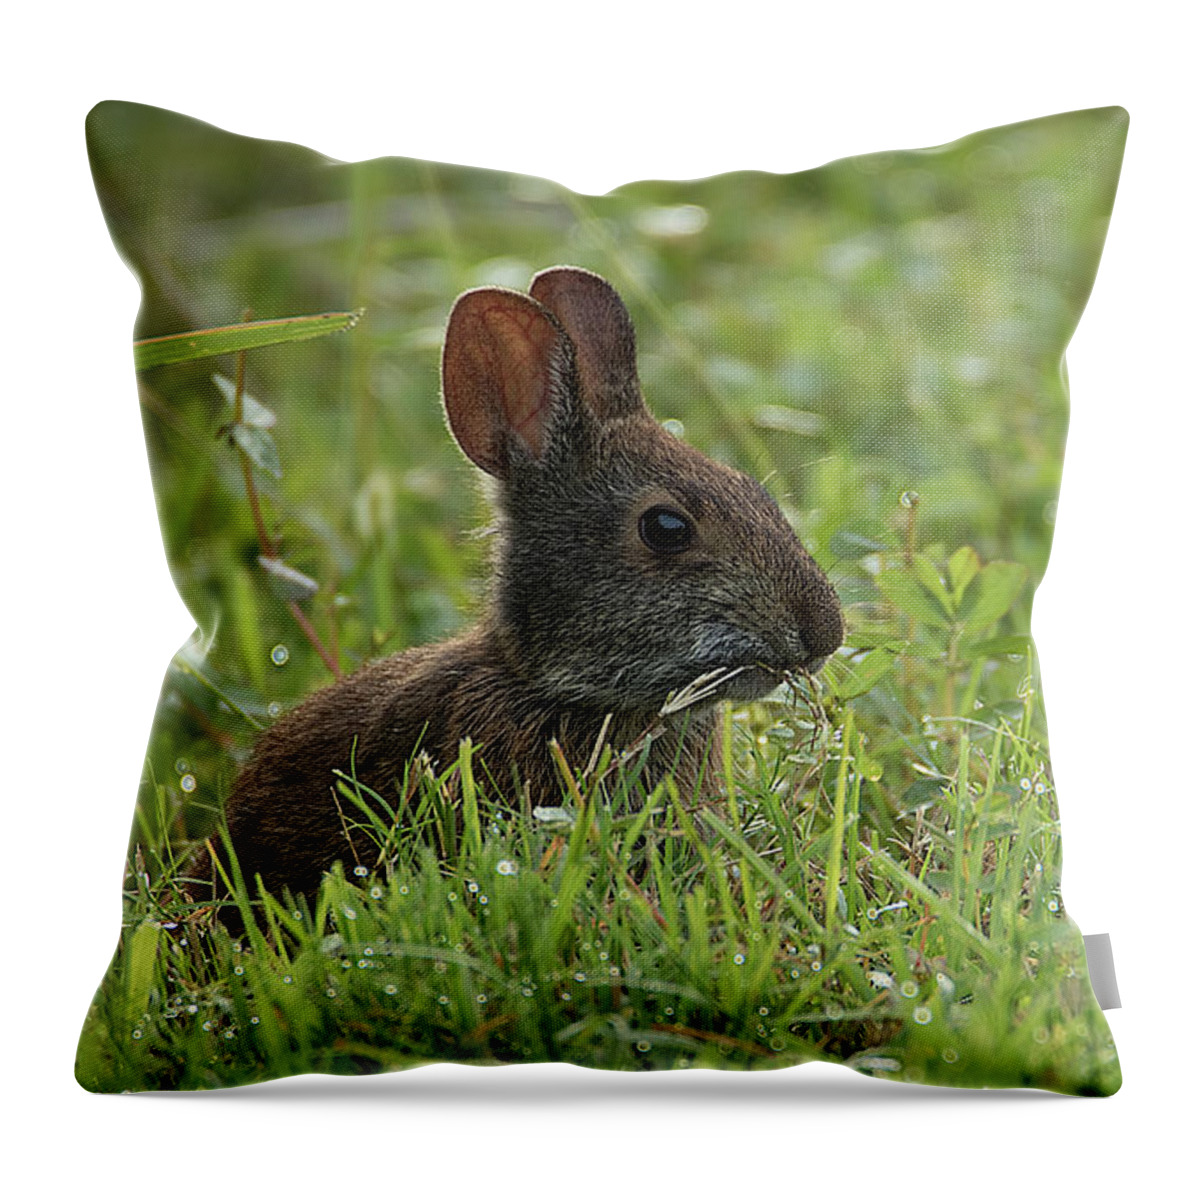 Rabbit Throw Pillow featuring the photograph Young Rabbit Dining by Richard Goldman